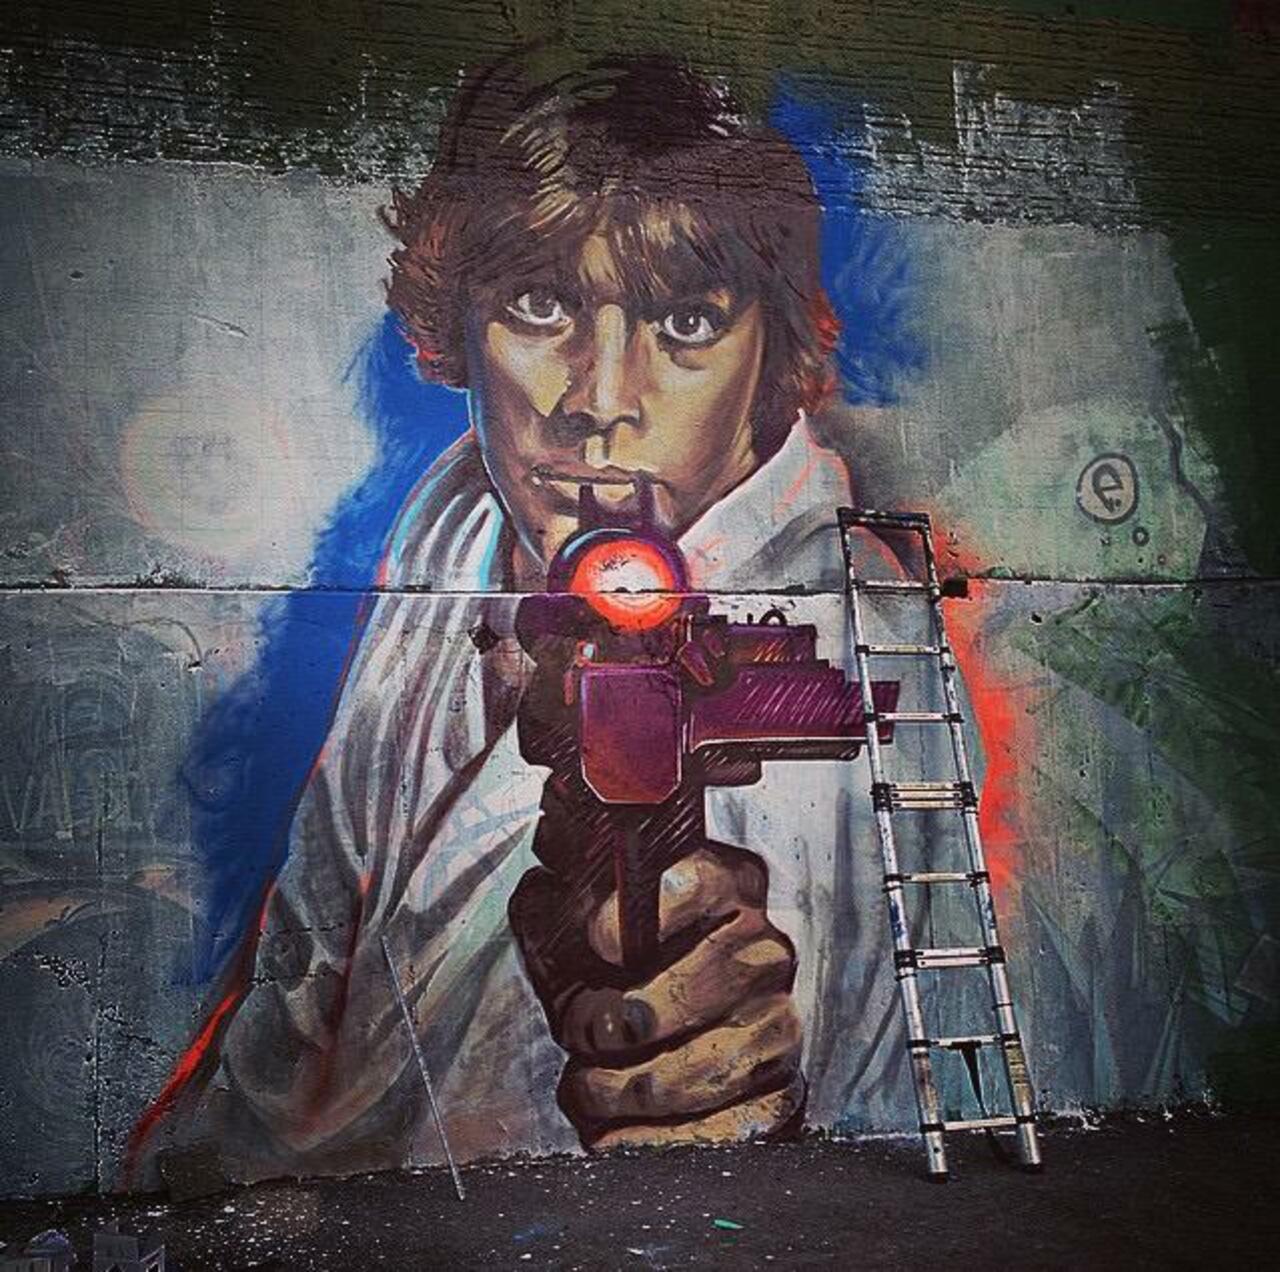 RT @GoogleStreetArt: New Street Art of Luke Skywalker @starwars by Thiago Valdi 

#art #arte #graffiti #streetart http://t.co/3g5l2WKUMM